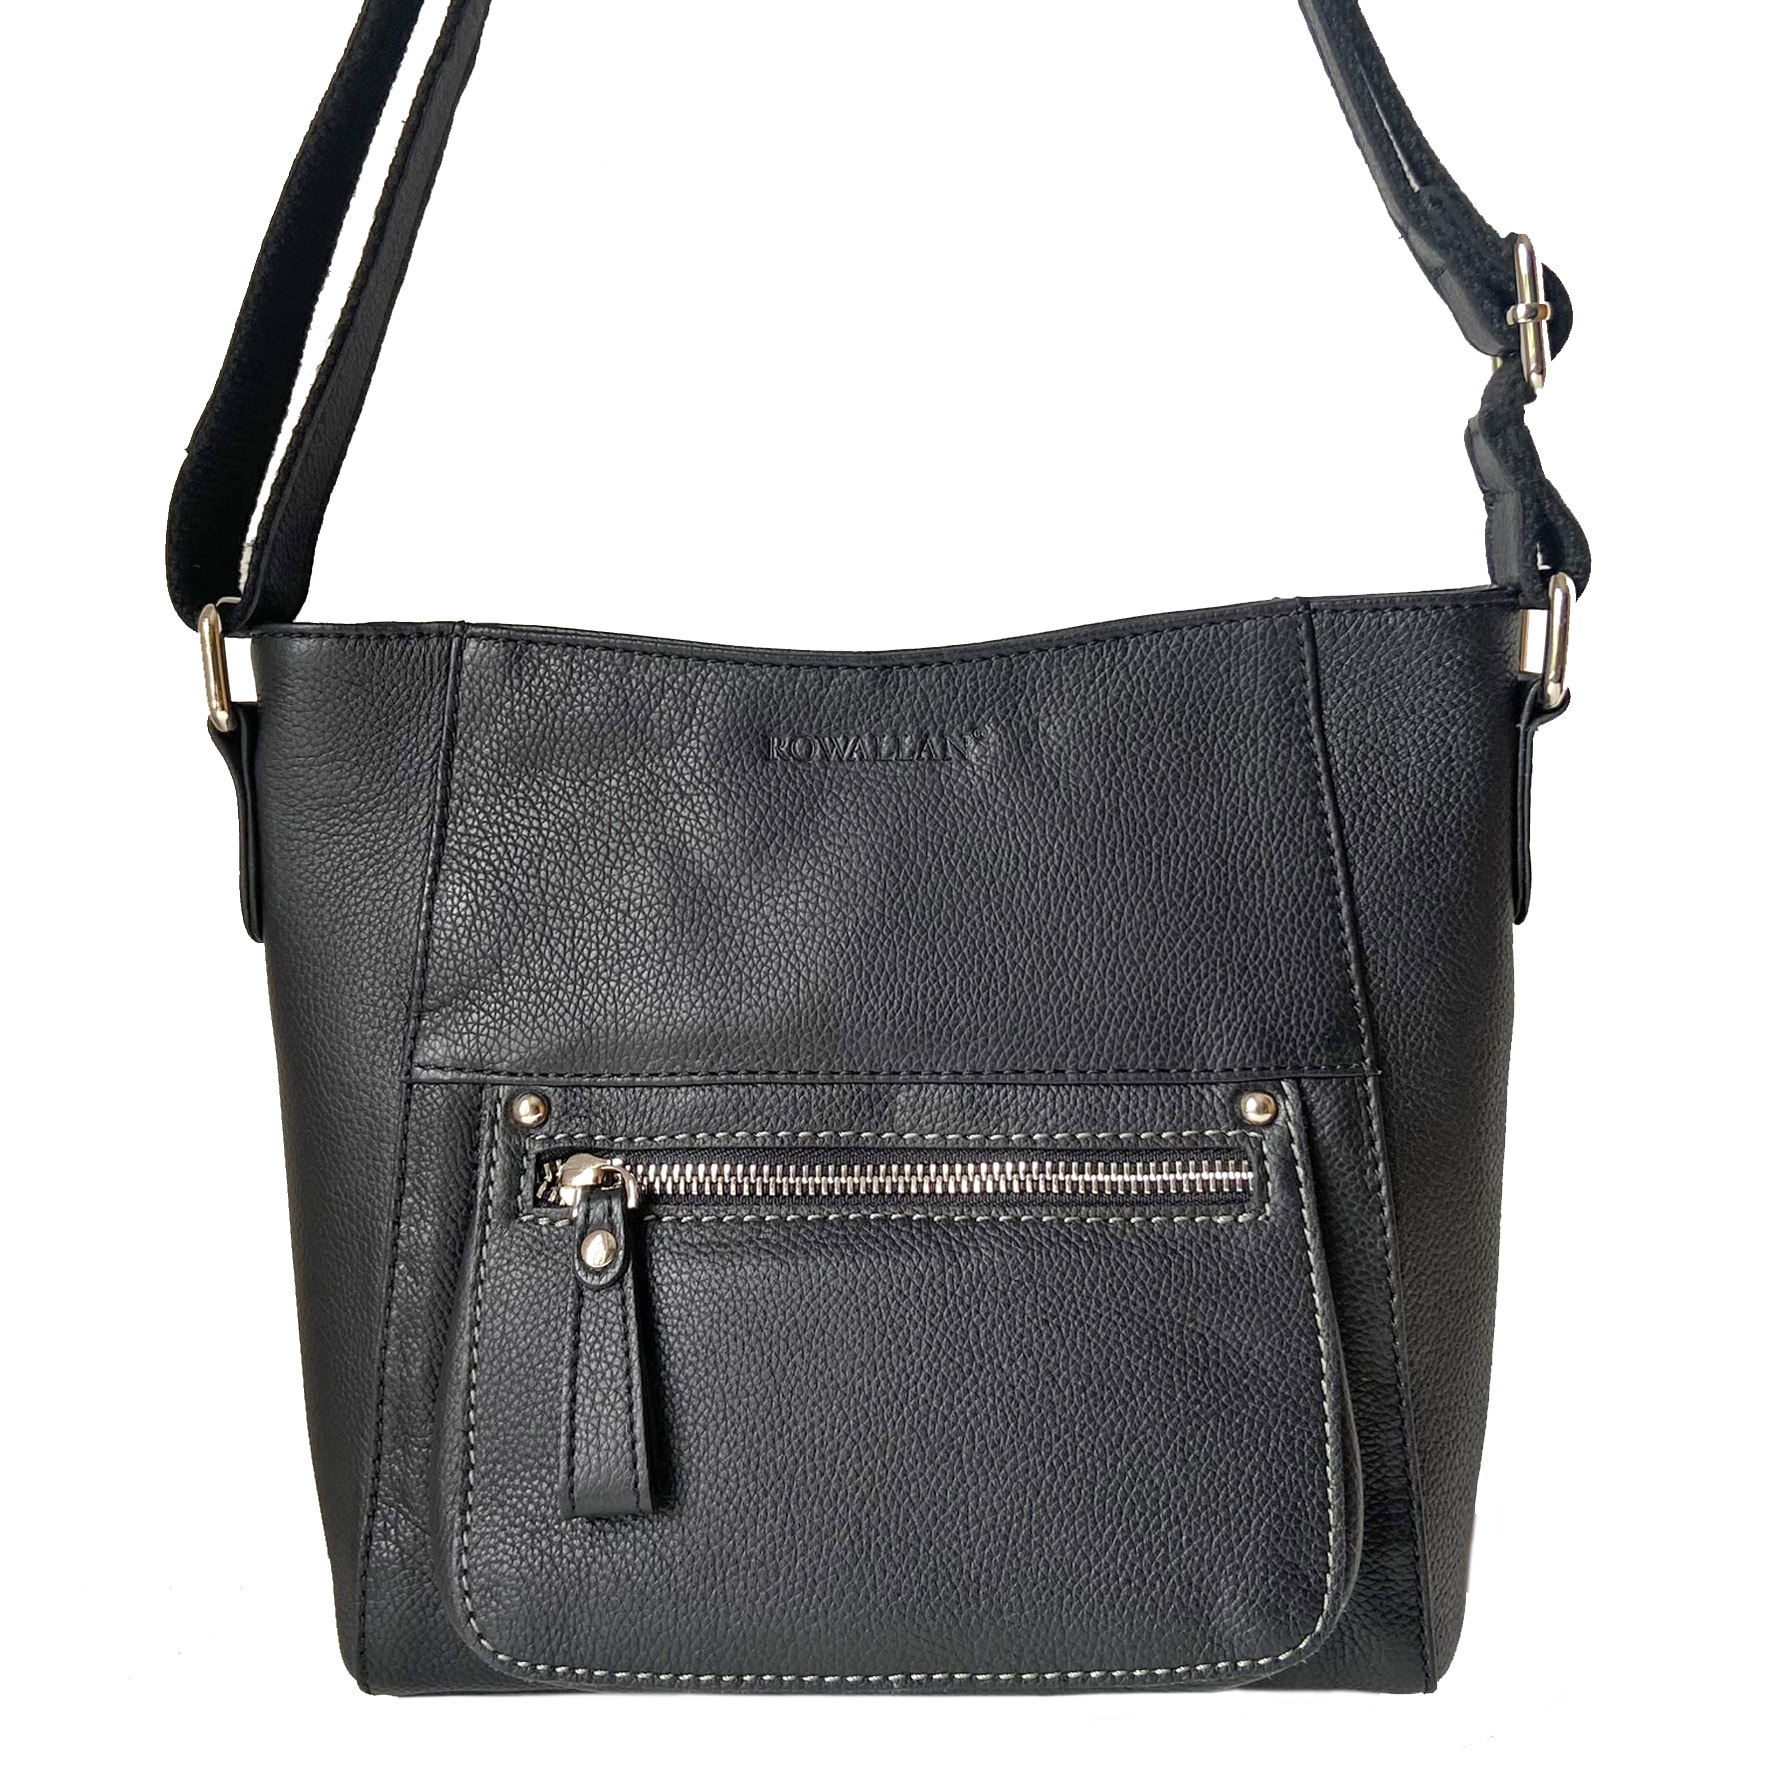 Rowallan Black Leather Shoulder Bag, Cross Body Bag